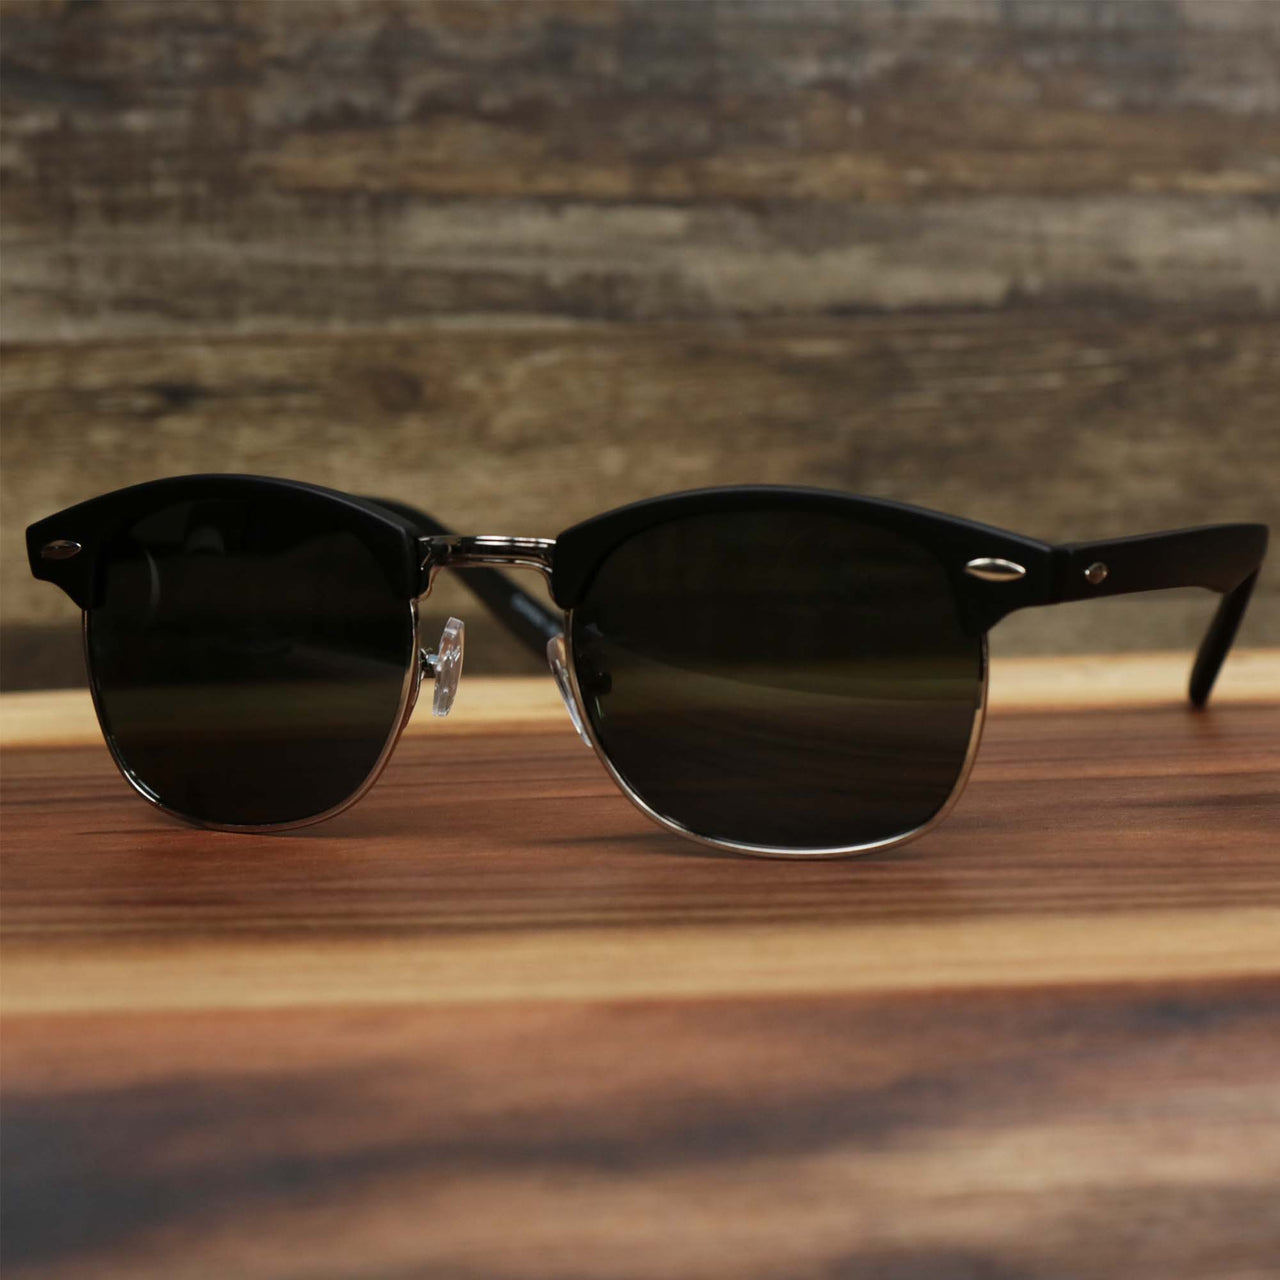 The Round Frame Black Lens Sunglasses with Black Silver Frame